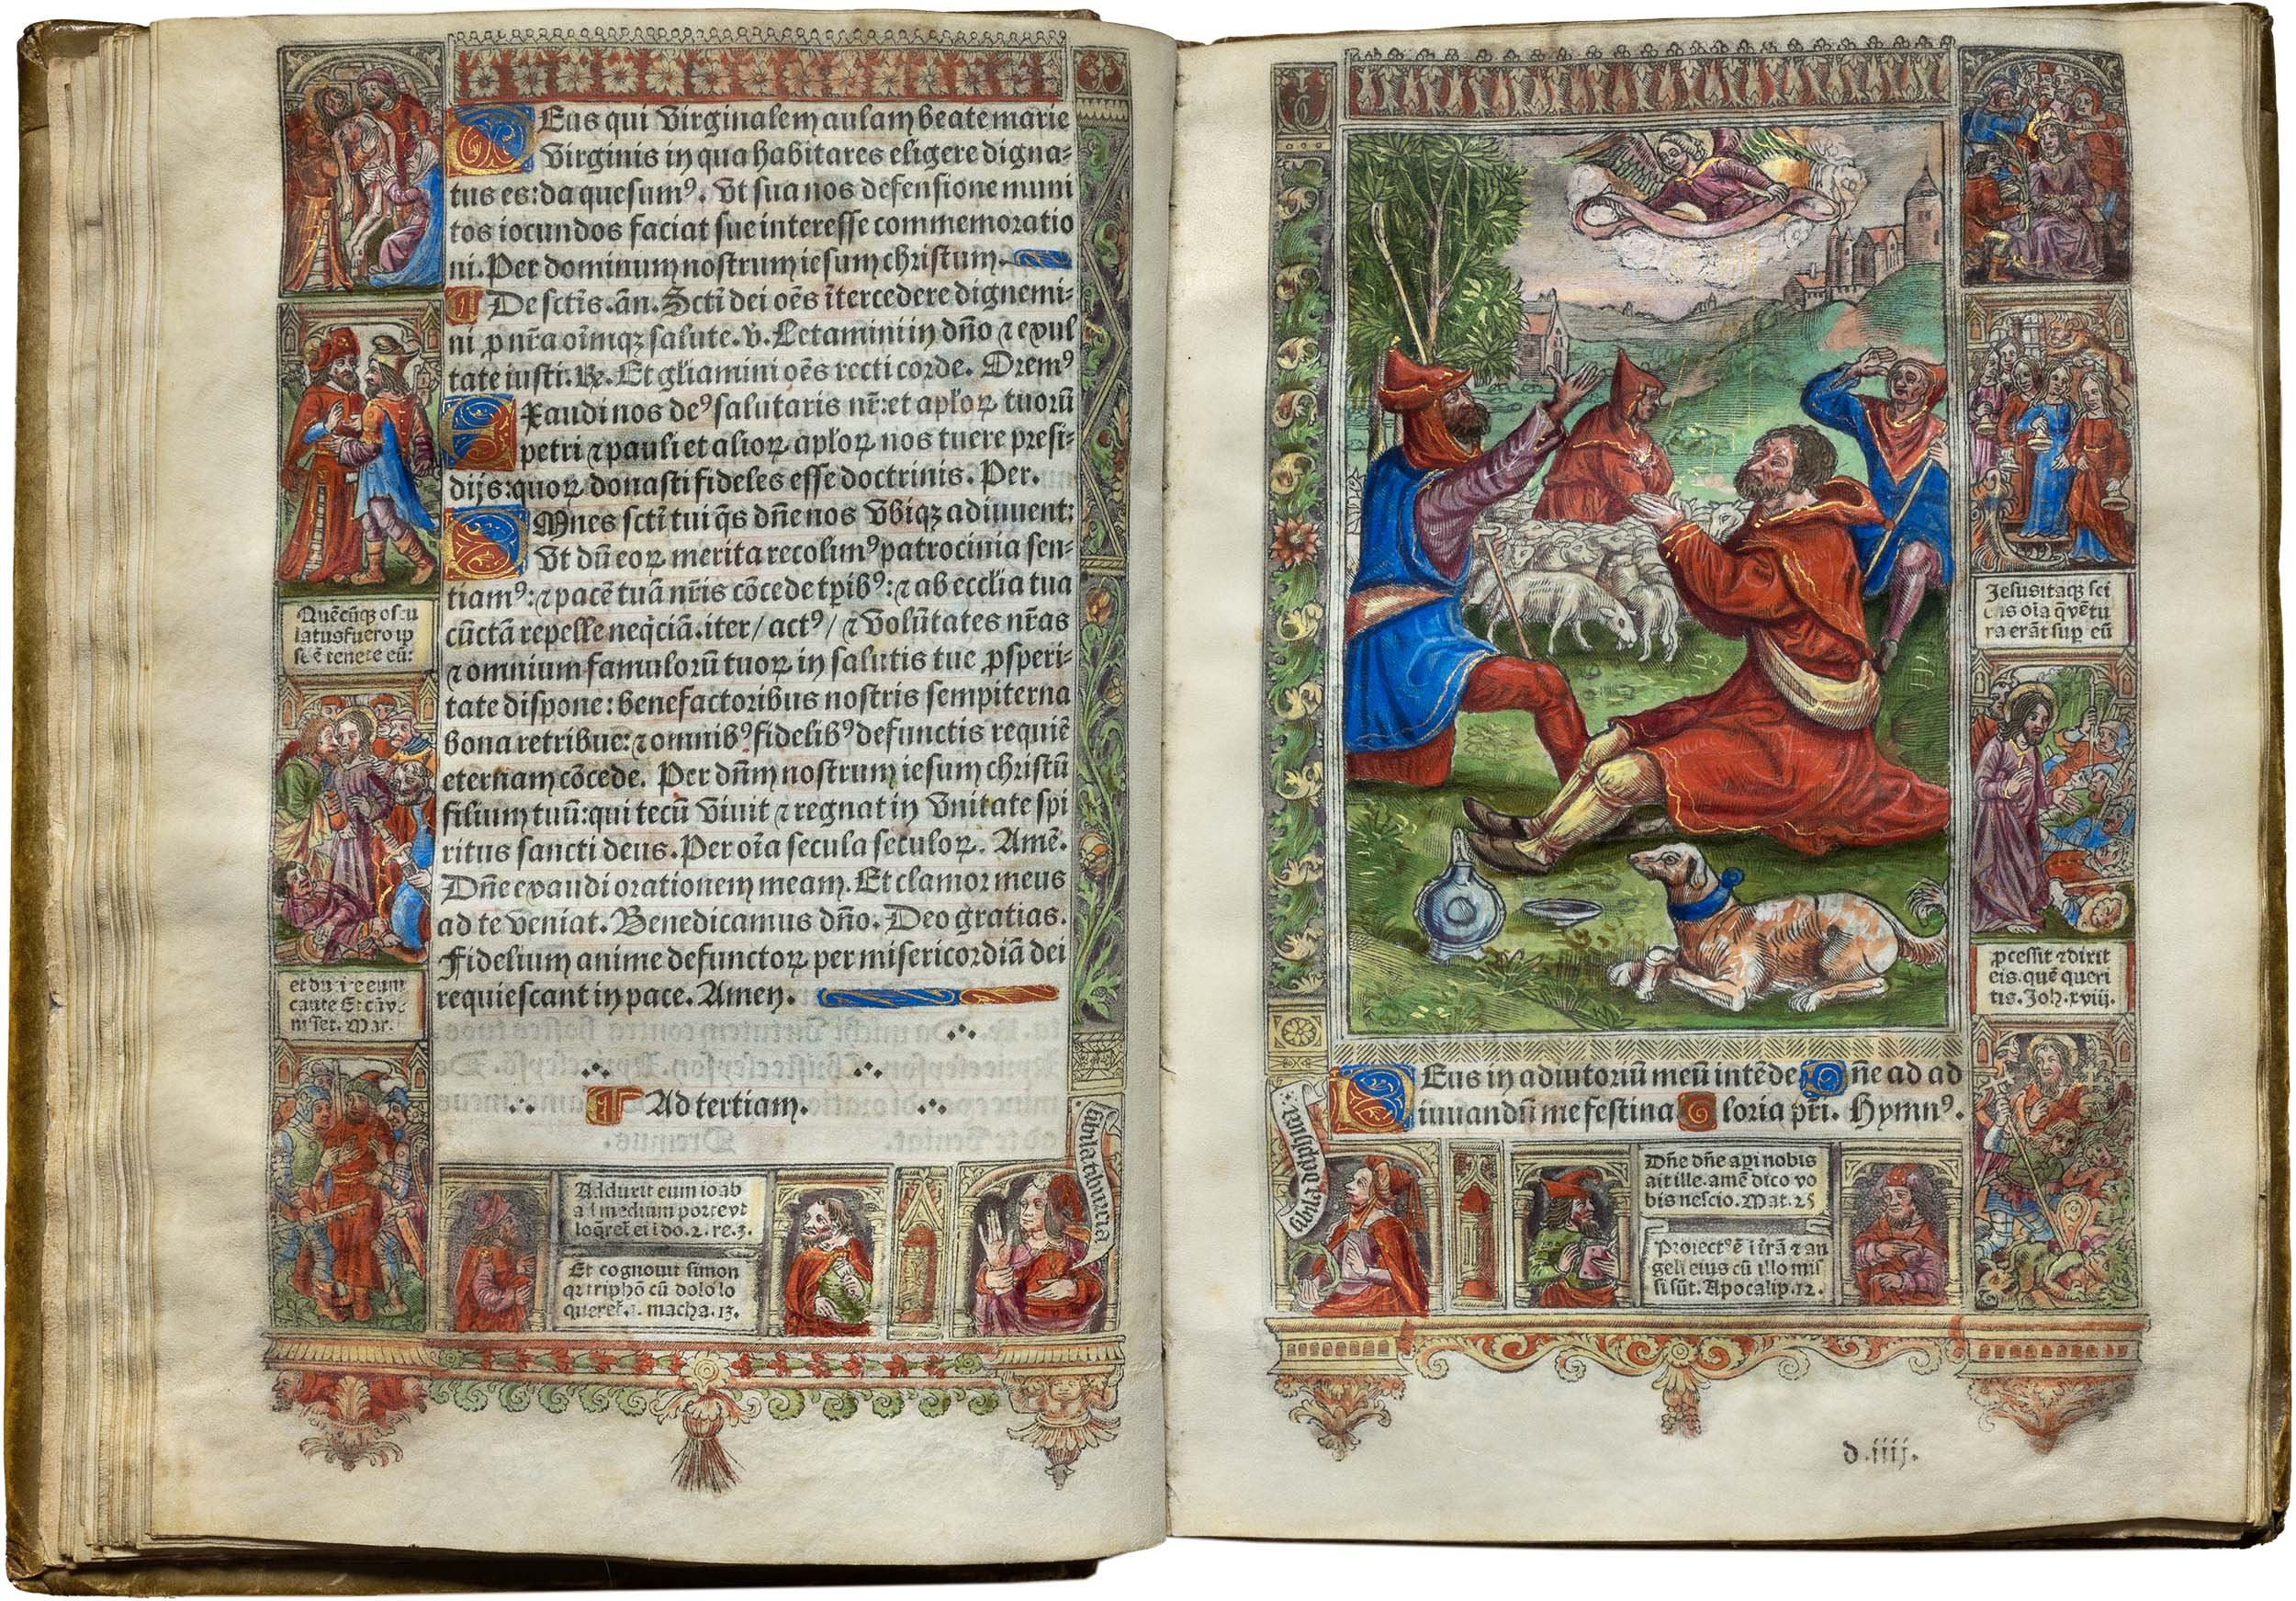 Horae-bmv-31-march-1511-kerver-printed-book-of-hours-illuminated-copy-vellum-31.jpg